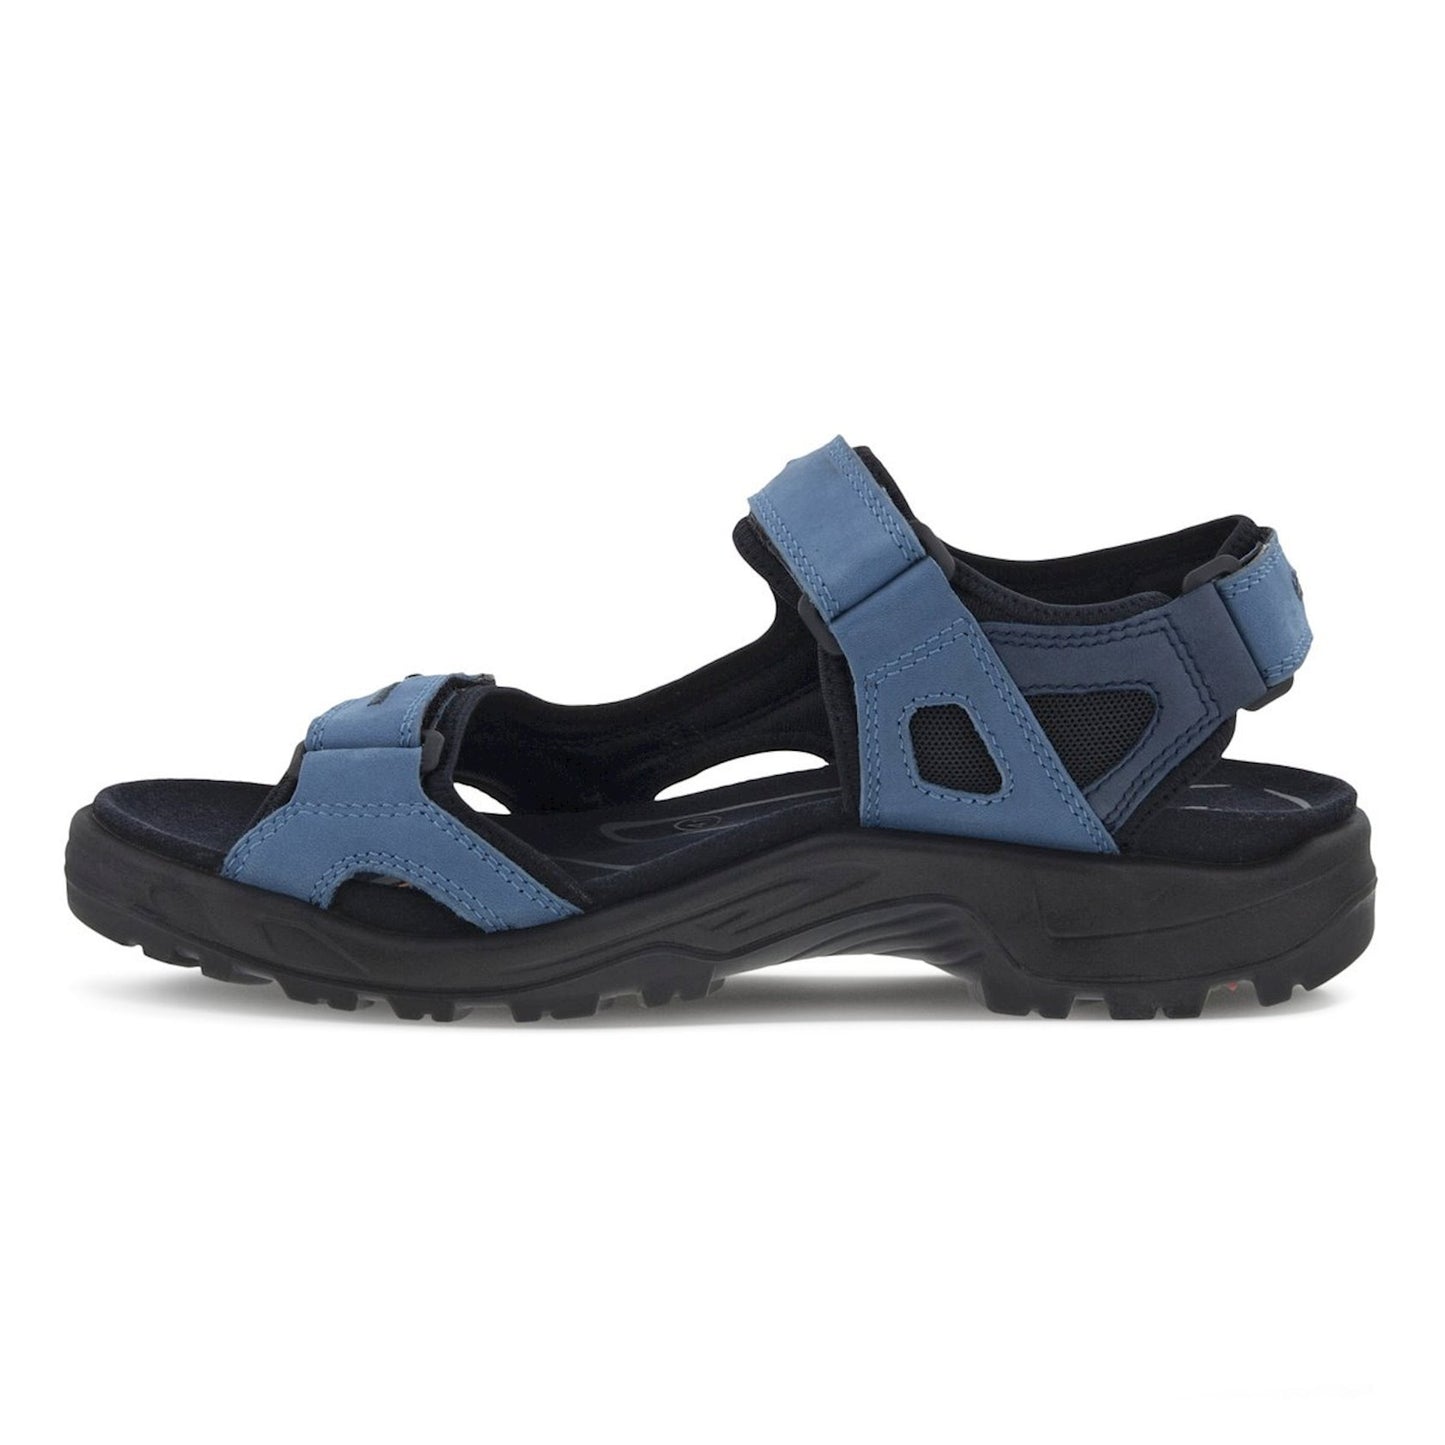 YUCATAN PETRO BLUE | Men's sandals Ecco 6956456923, blue, genuine leather/nubuck/textile-Brandy